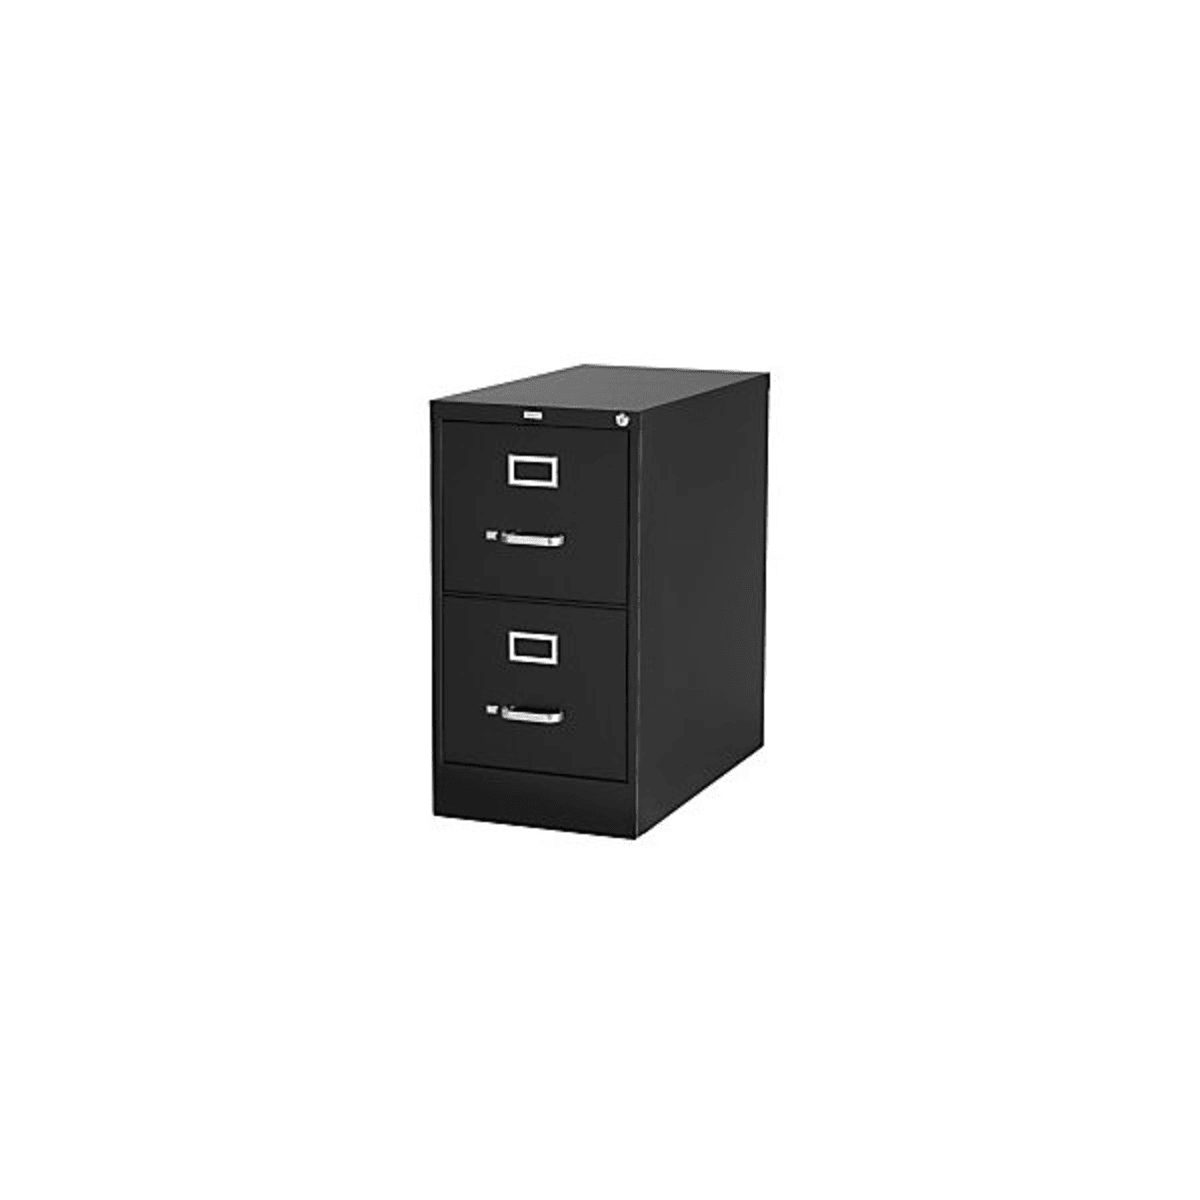 Realspace Pro 26 1 2 Depth Vertical Letter File Cabinet 2 Drawer Black Hd Supply